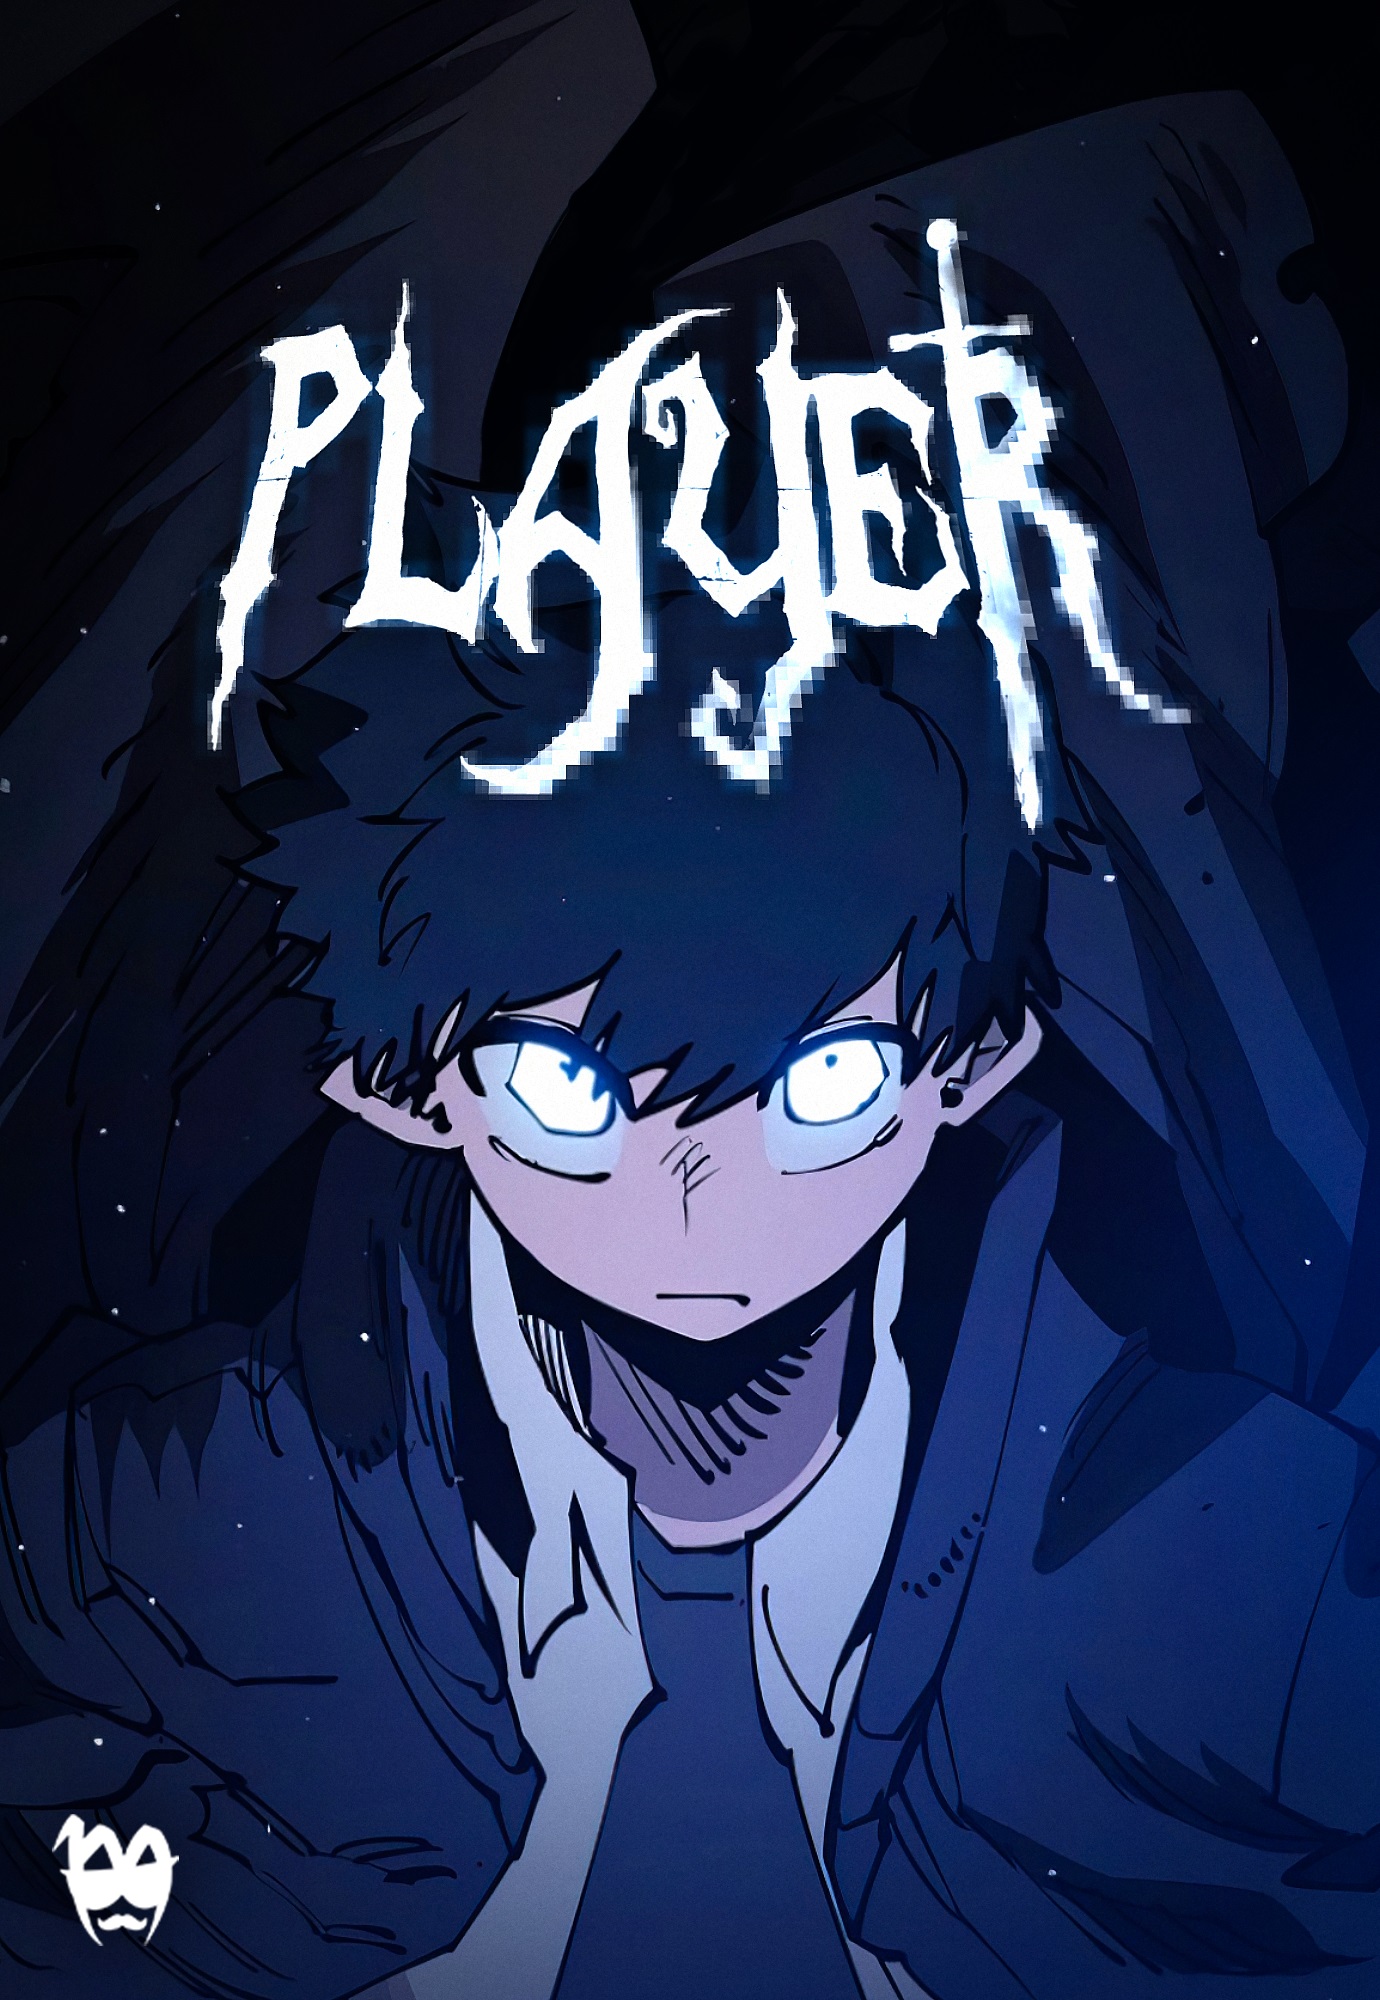 Player character - Wikipedia